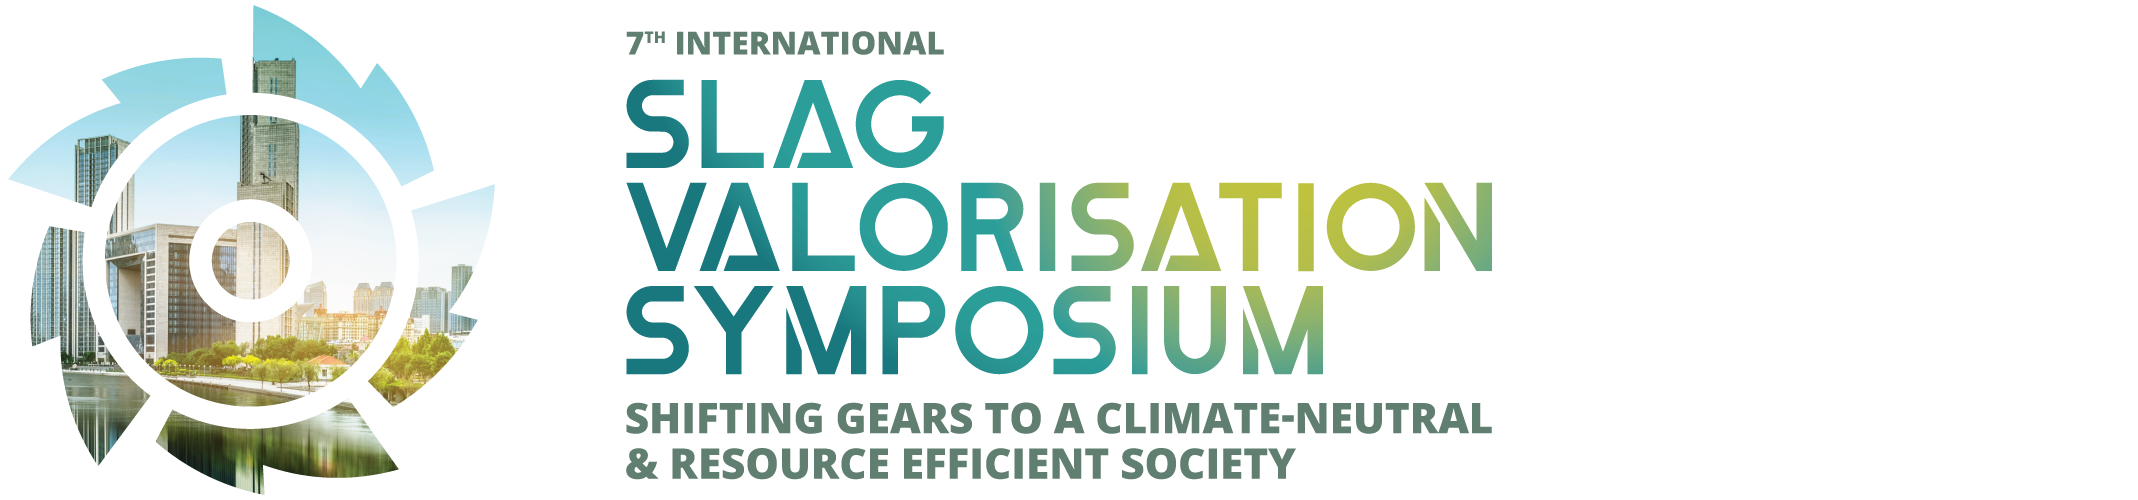 7th International Slag Valorisation Symposium